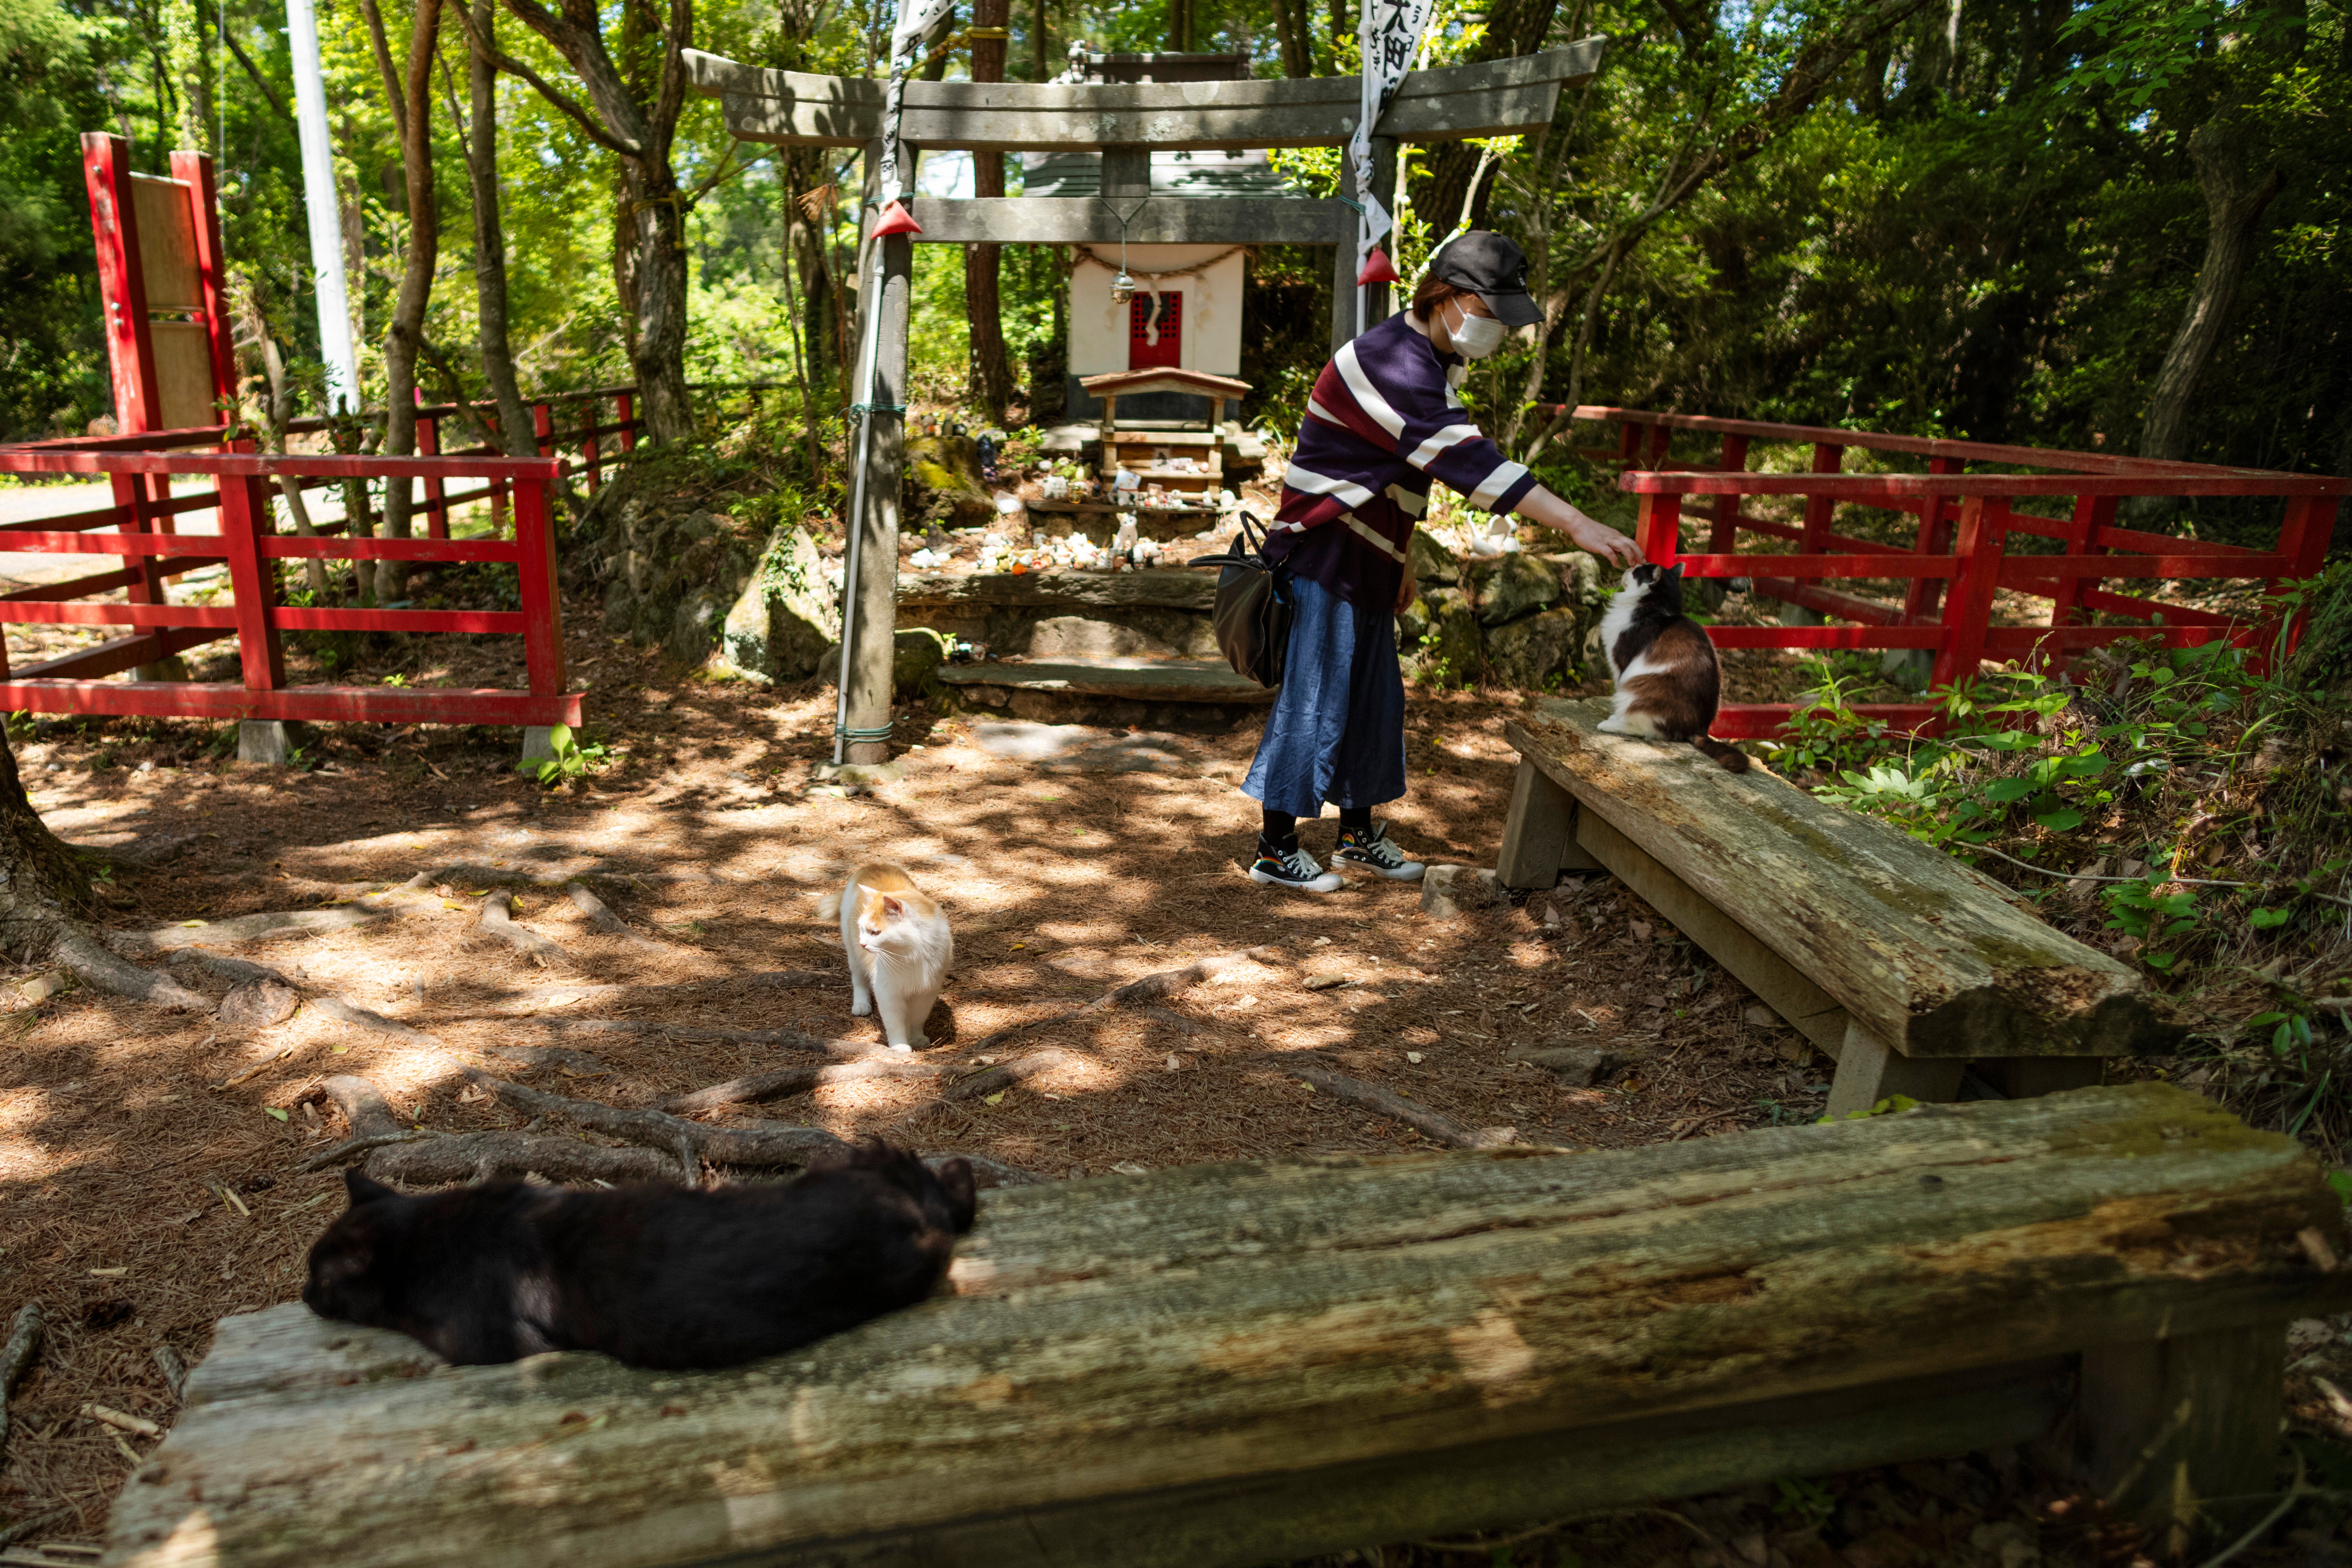 Over 100 cats inhabit Tashirojima